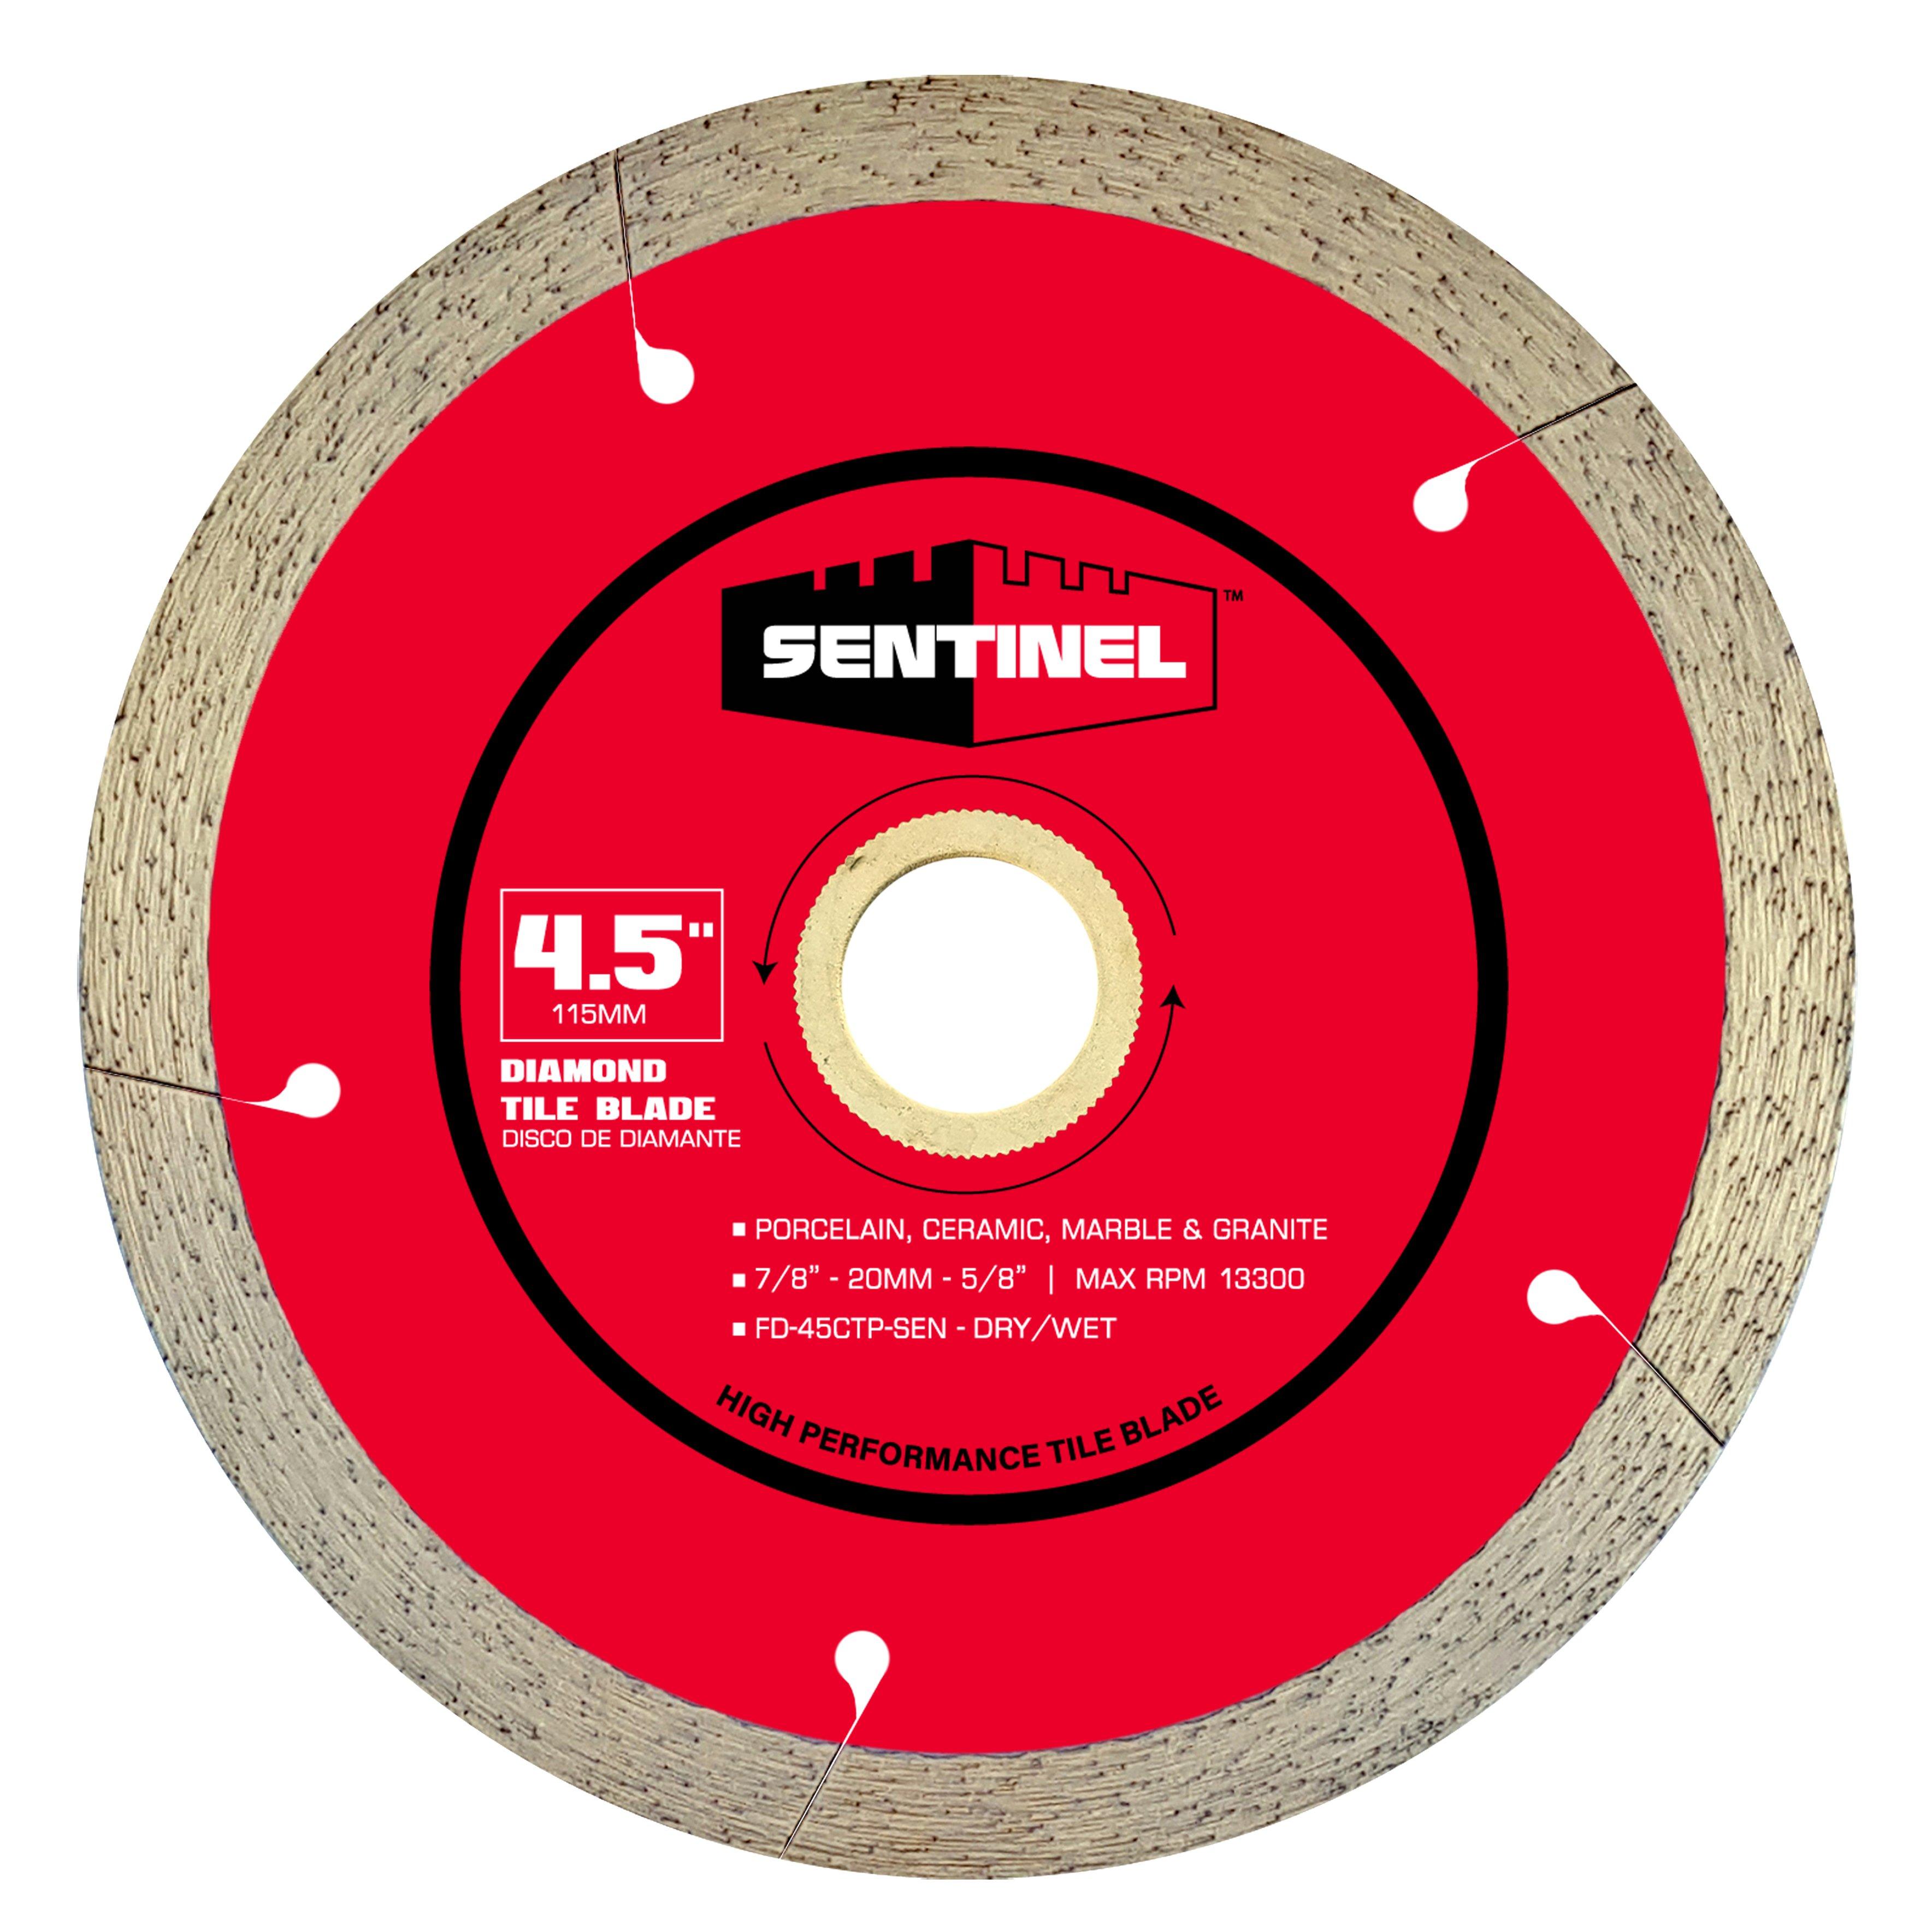 Sentinel 4 1/2in. Tile Diamond Blade